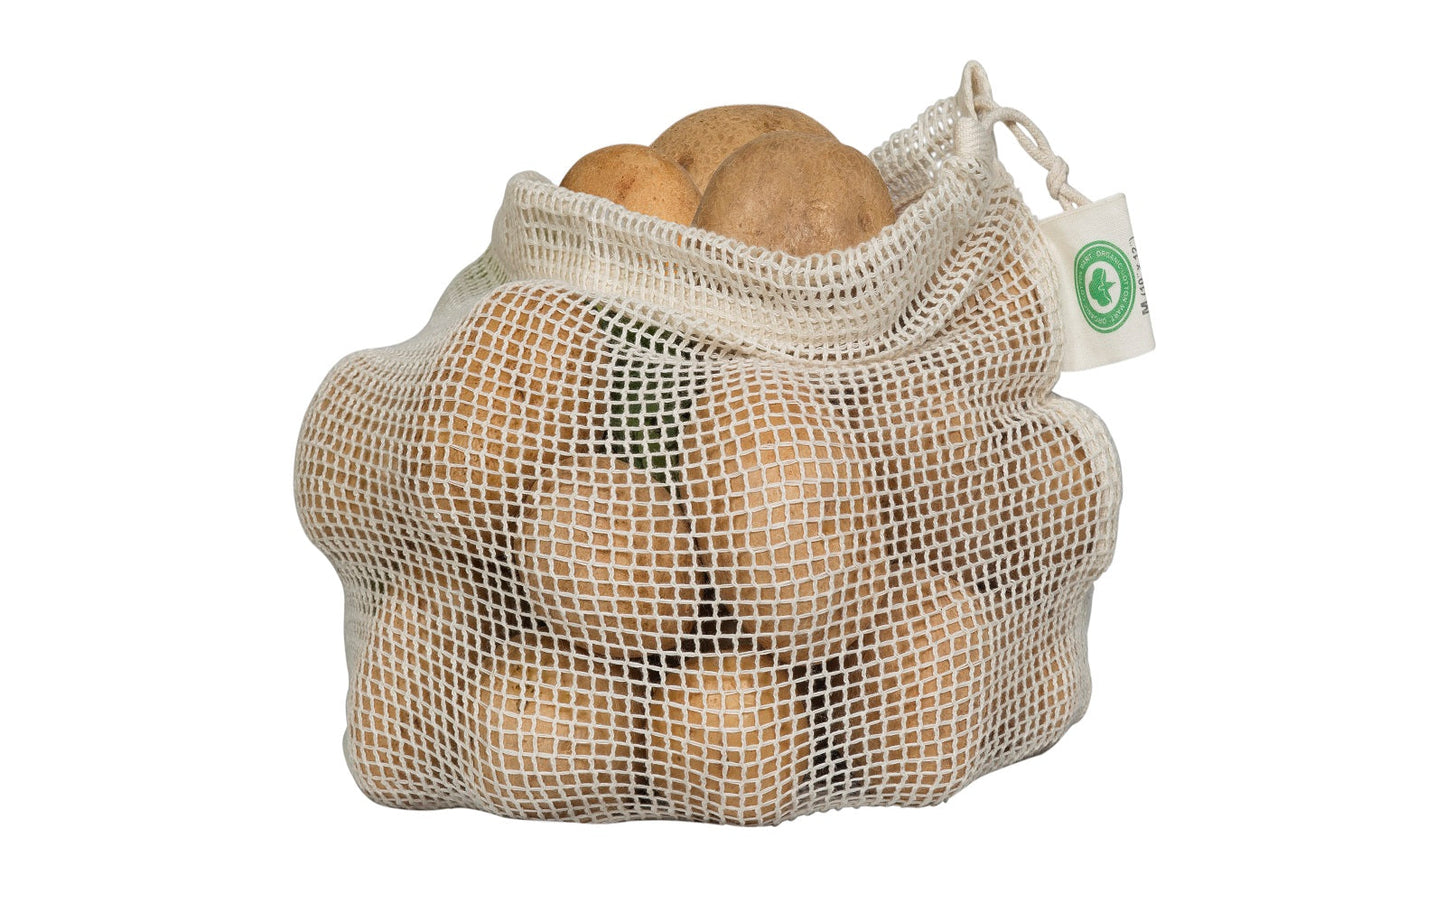 reusable mesh cotton produce bags